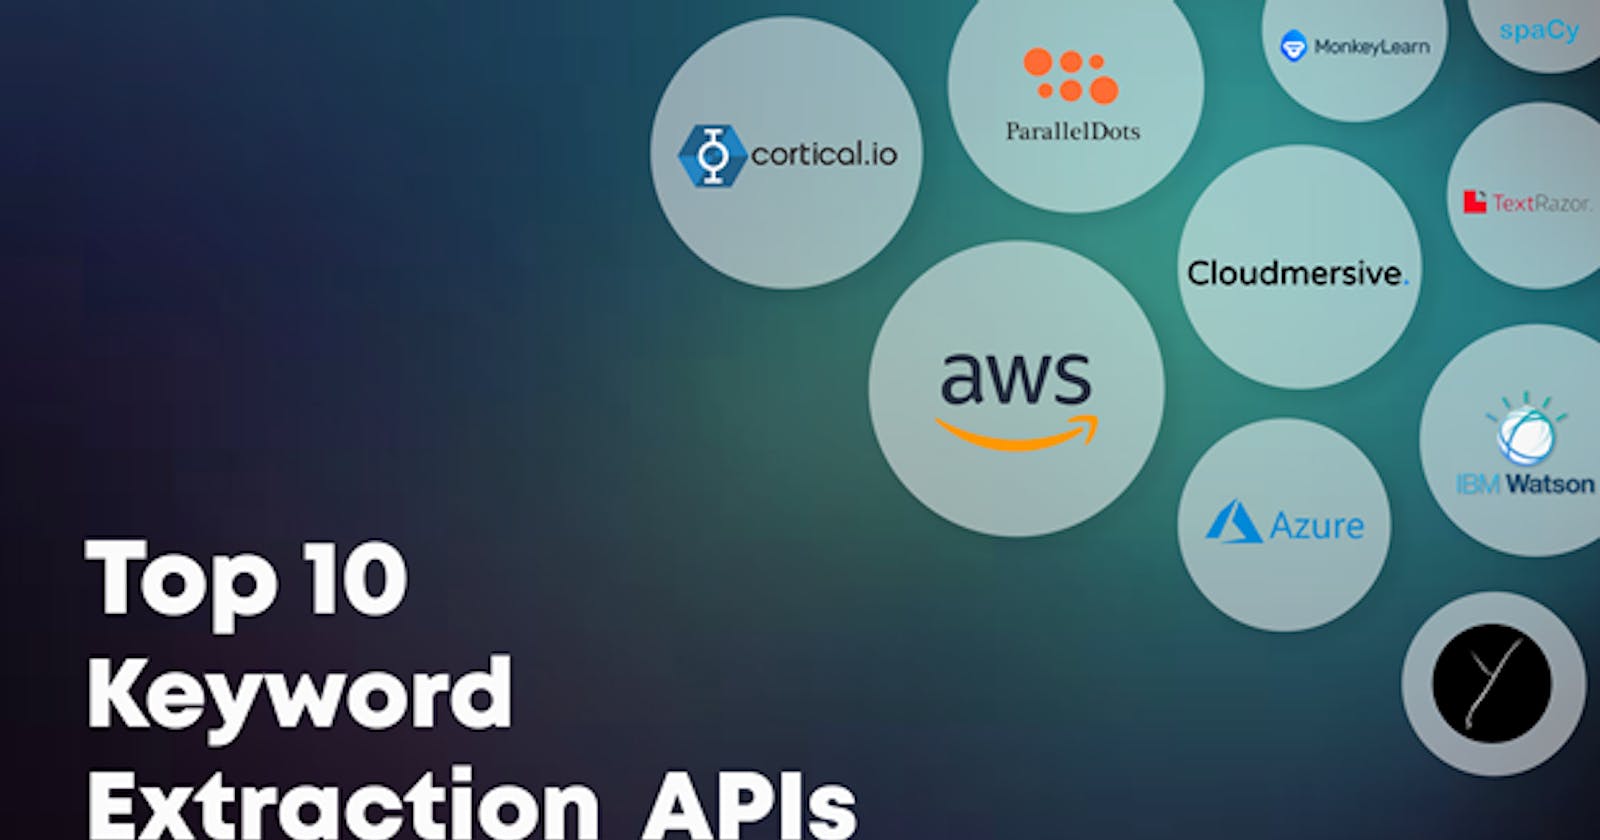 Top 10 Keyword Extraction APIs